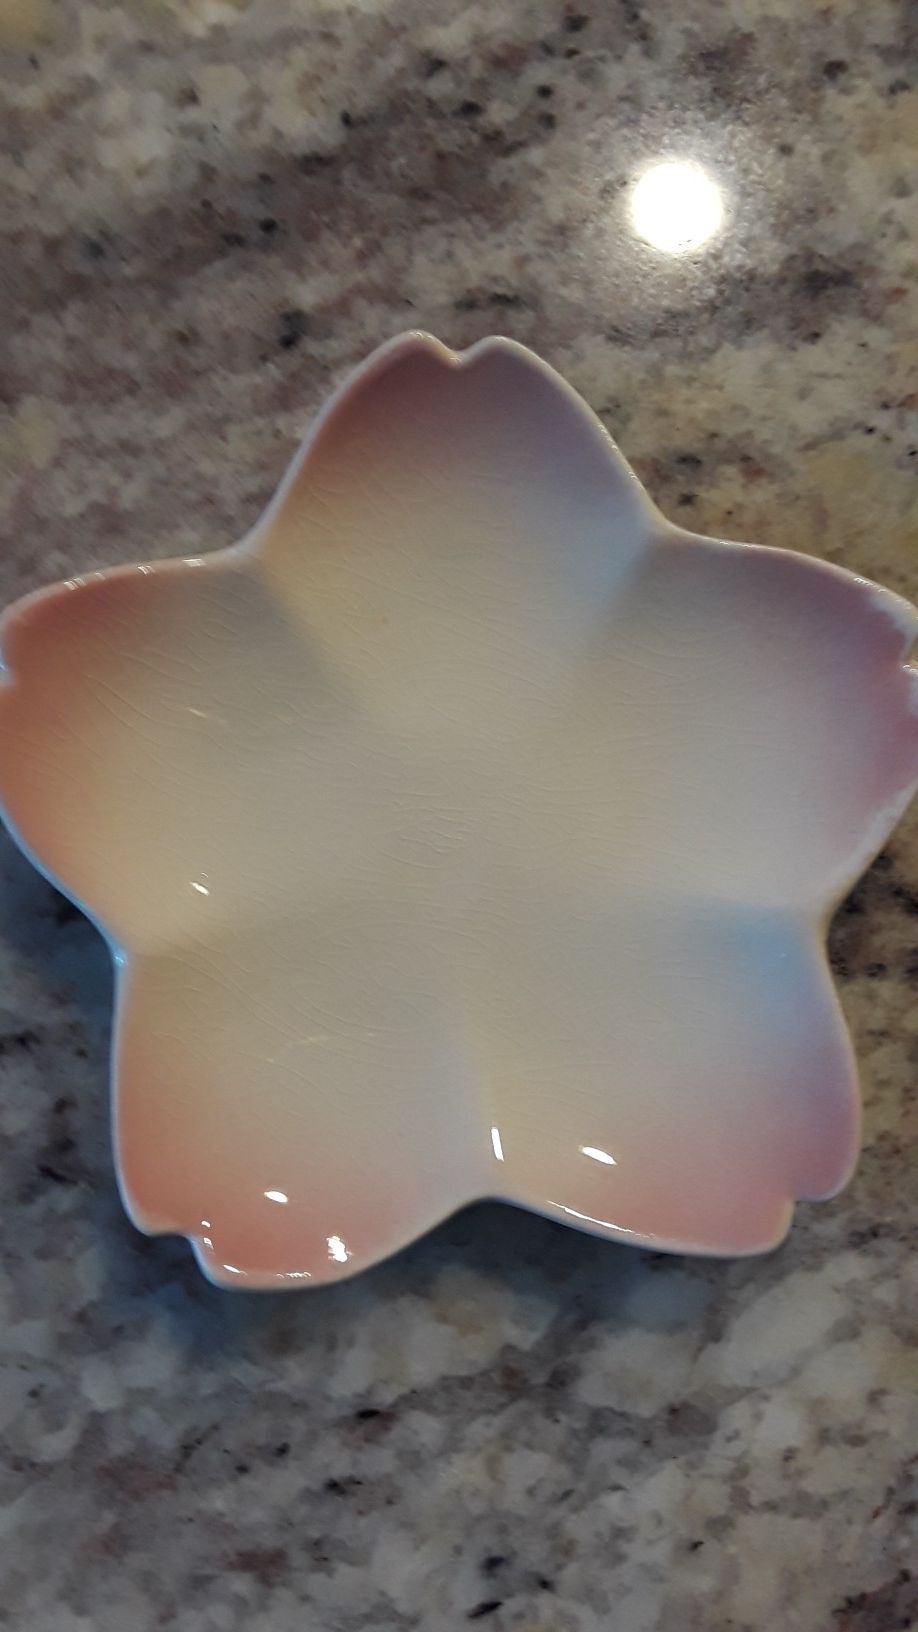 A beautiful cherry blossom shaped plate. Reare!